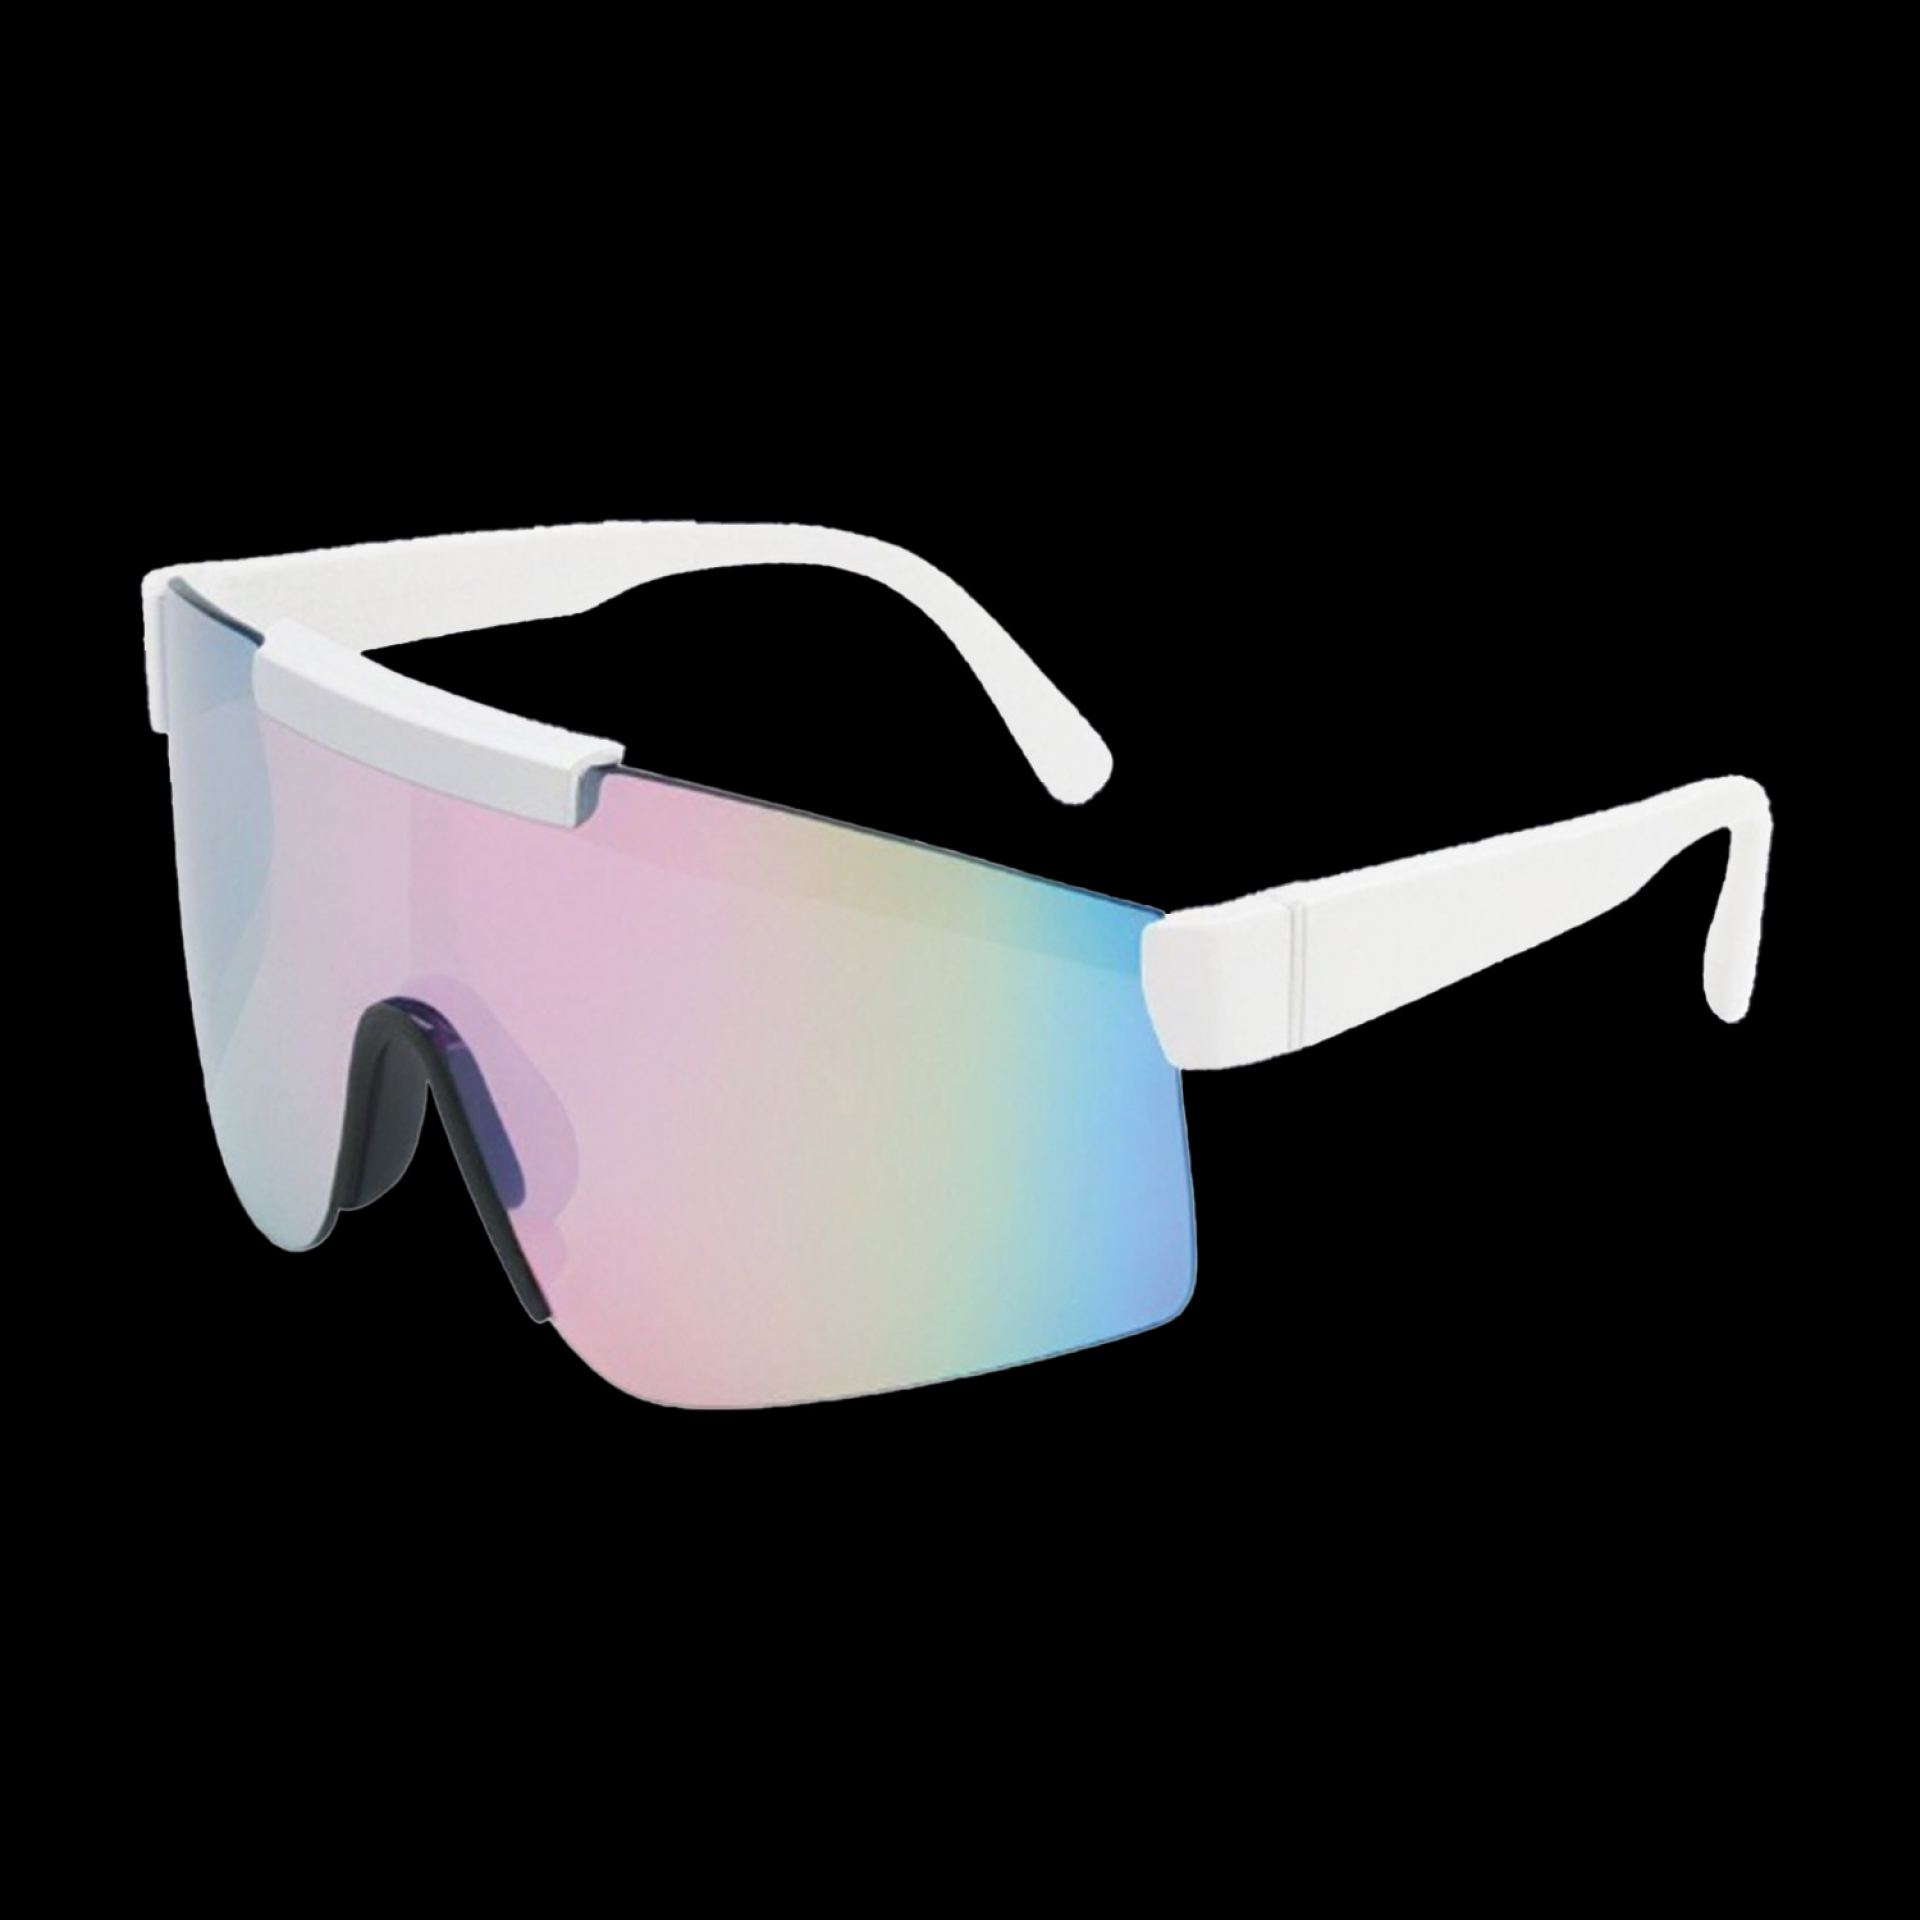 Rave bril sport zonnebril wit/roze